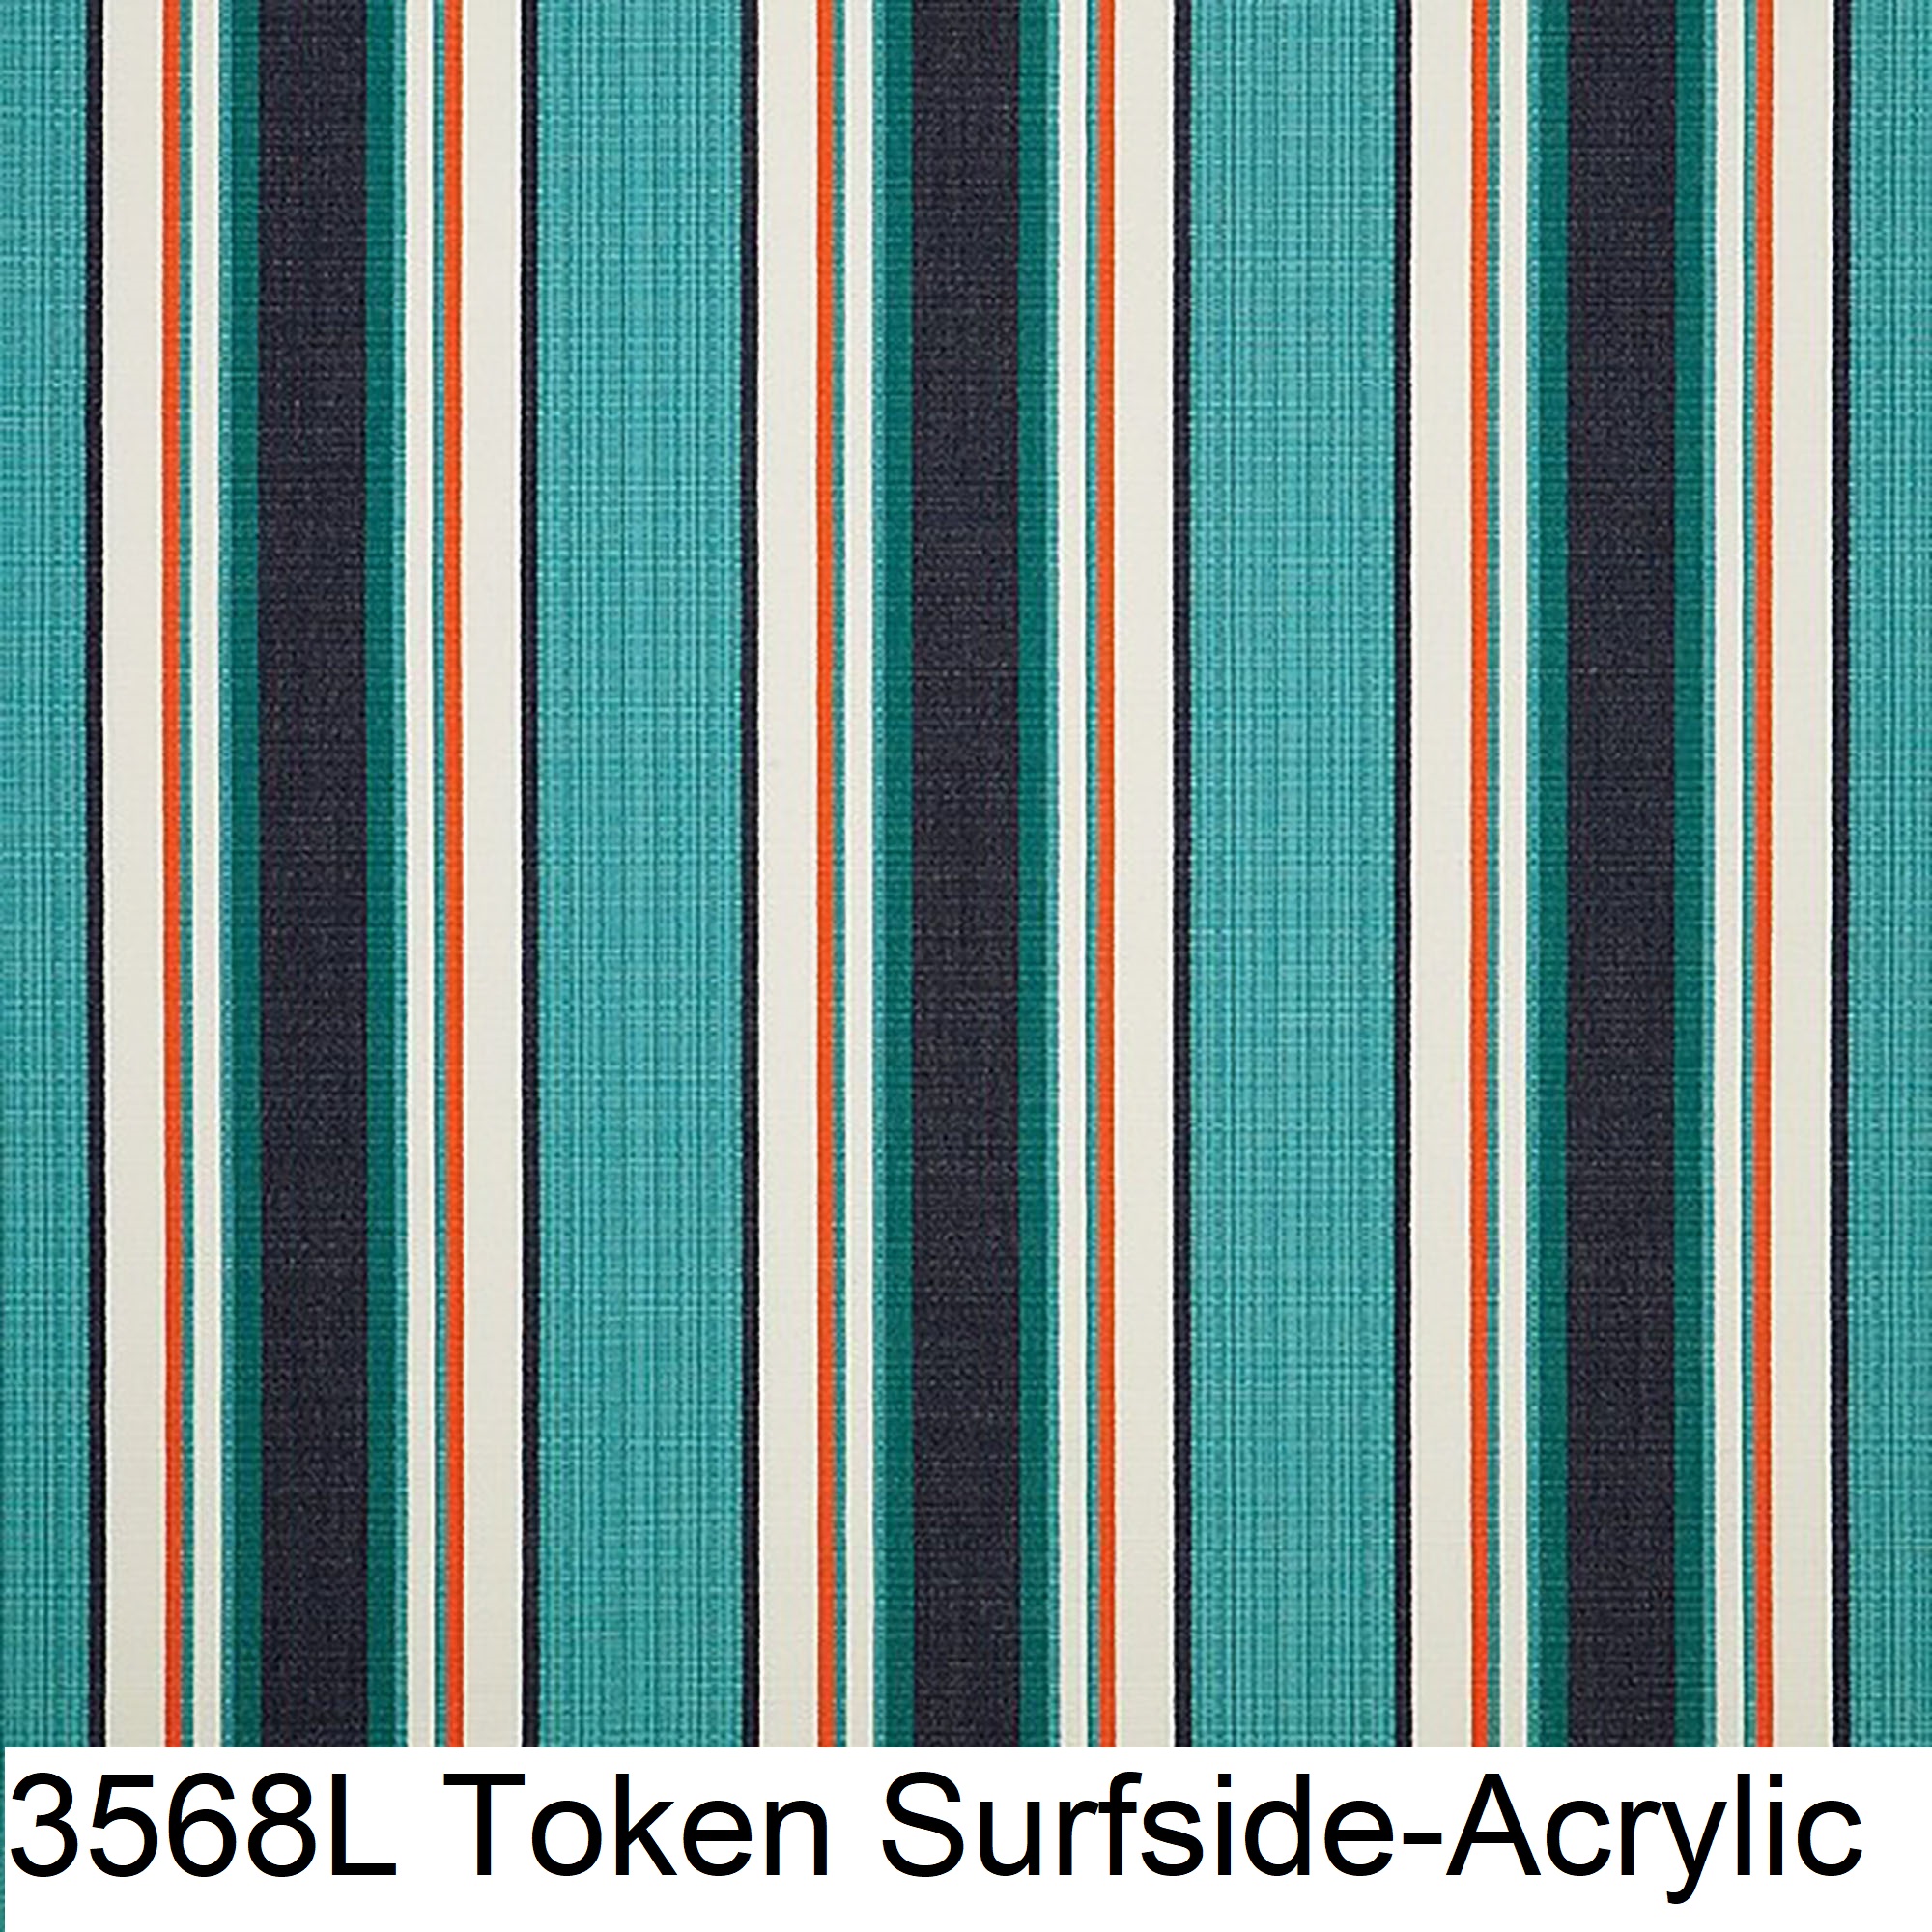 3568L Token Surfside-Acrylic